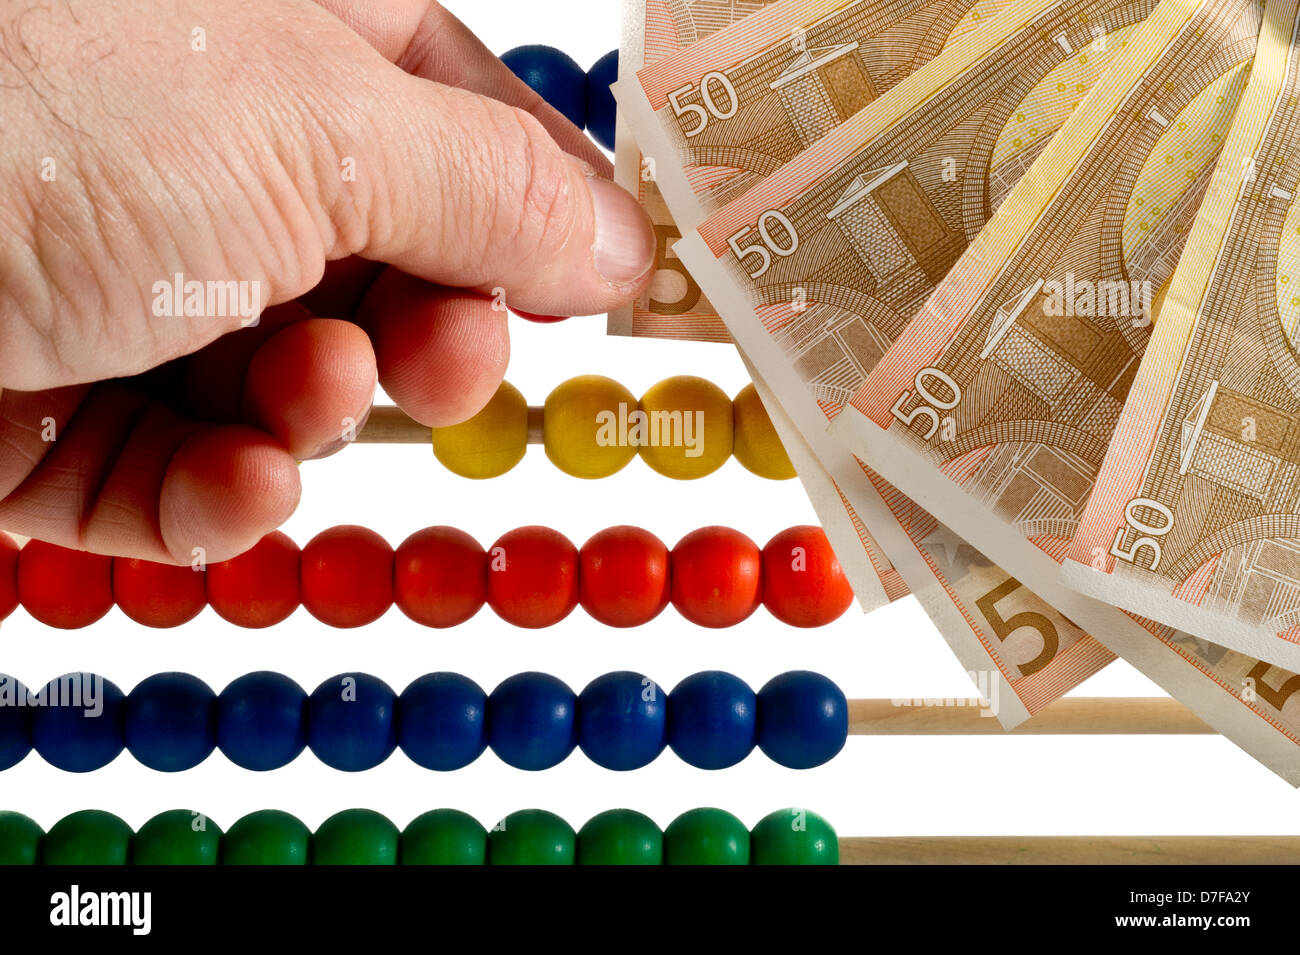 Abacus beads with euro, european money Stock Photo